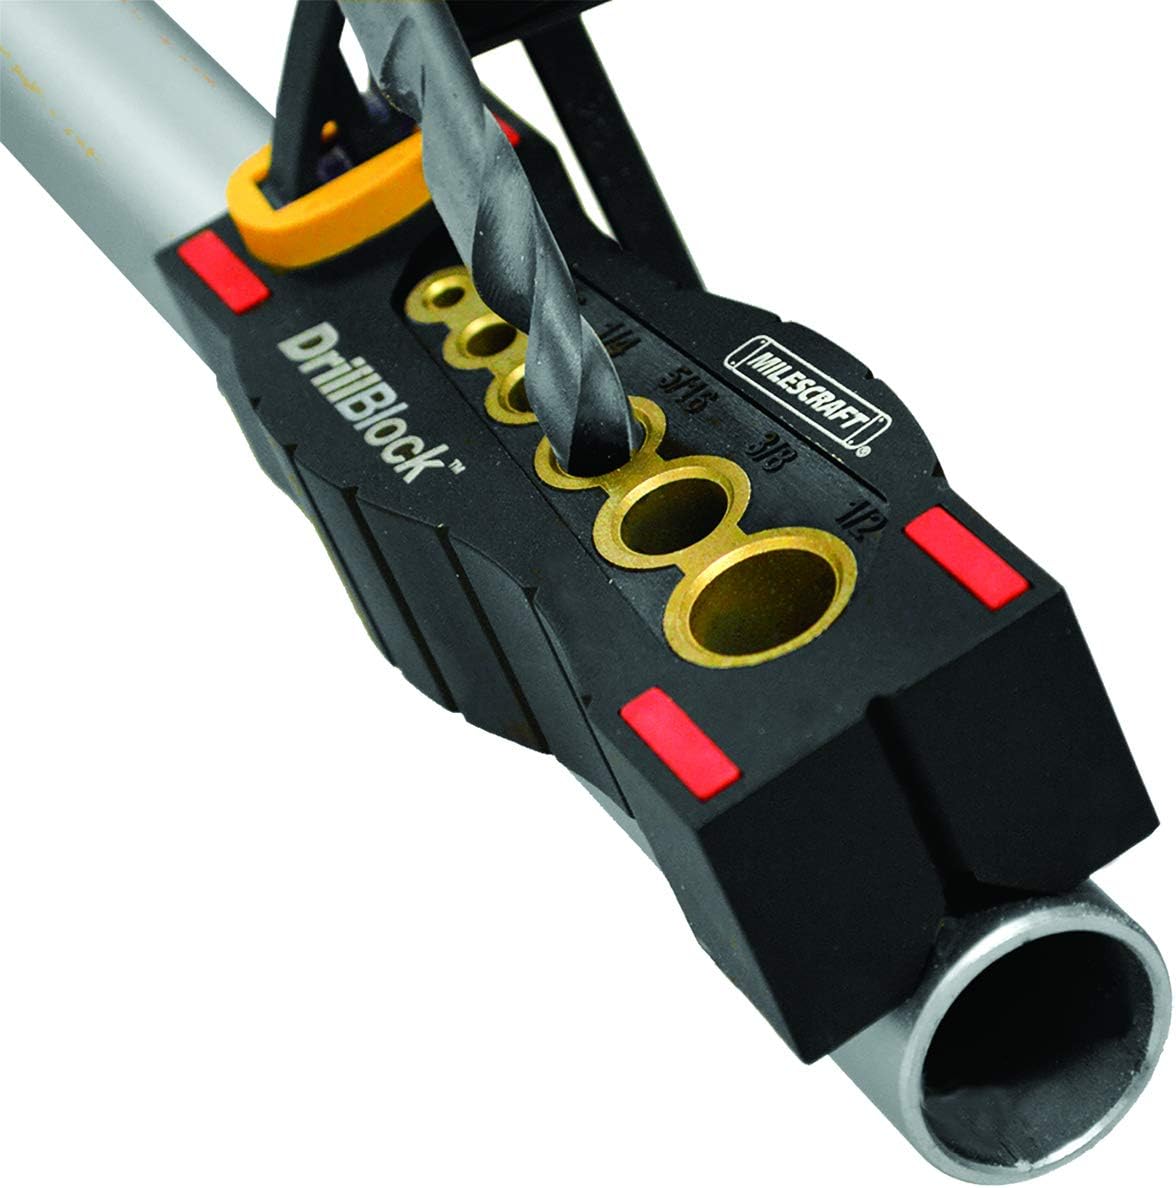 Milescraft 1312 DrillBlock Handheld Drill Guide - Perfect 90(degree) Drilling - 6 Steel Bushings - Anti-Slip - V-Drill Guide - Works on Fl